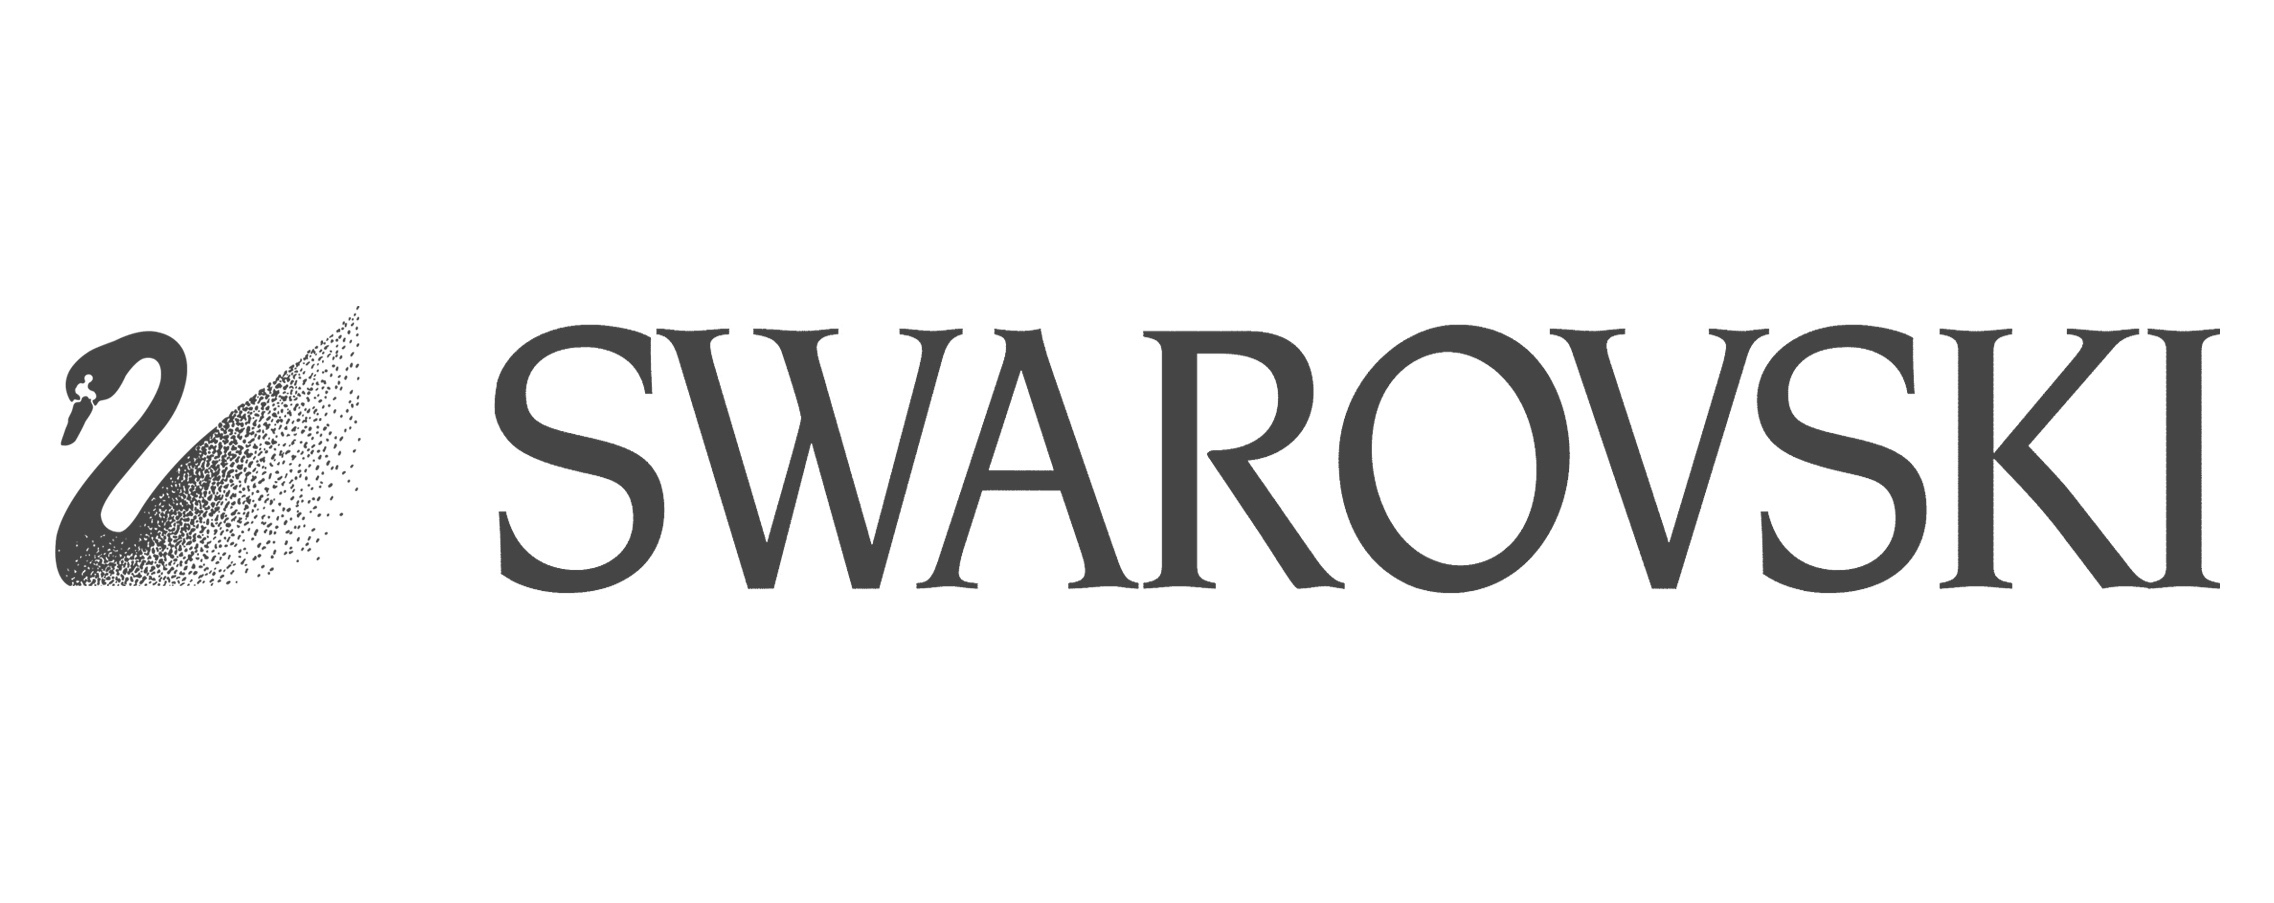 swarovski-logo-11-2.png